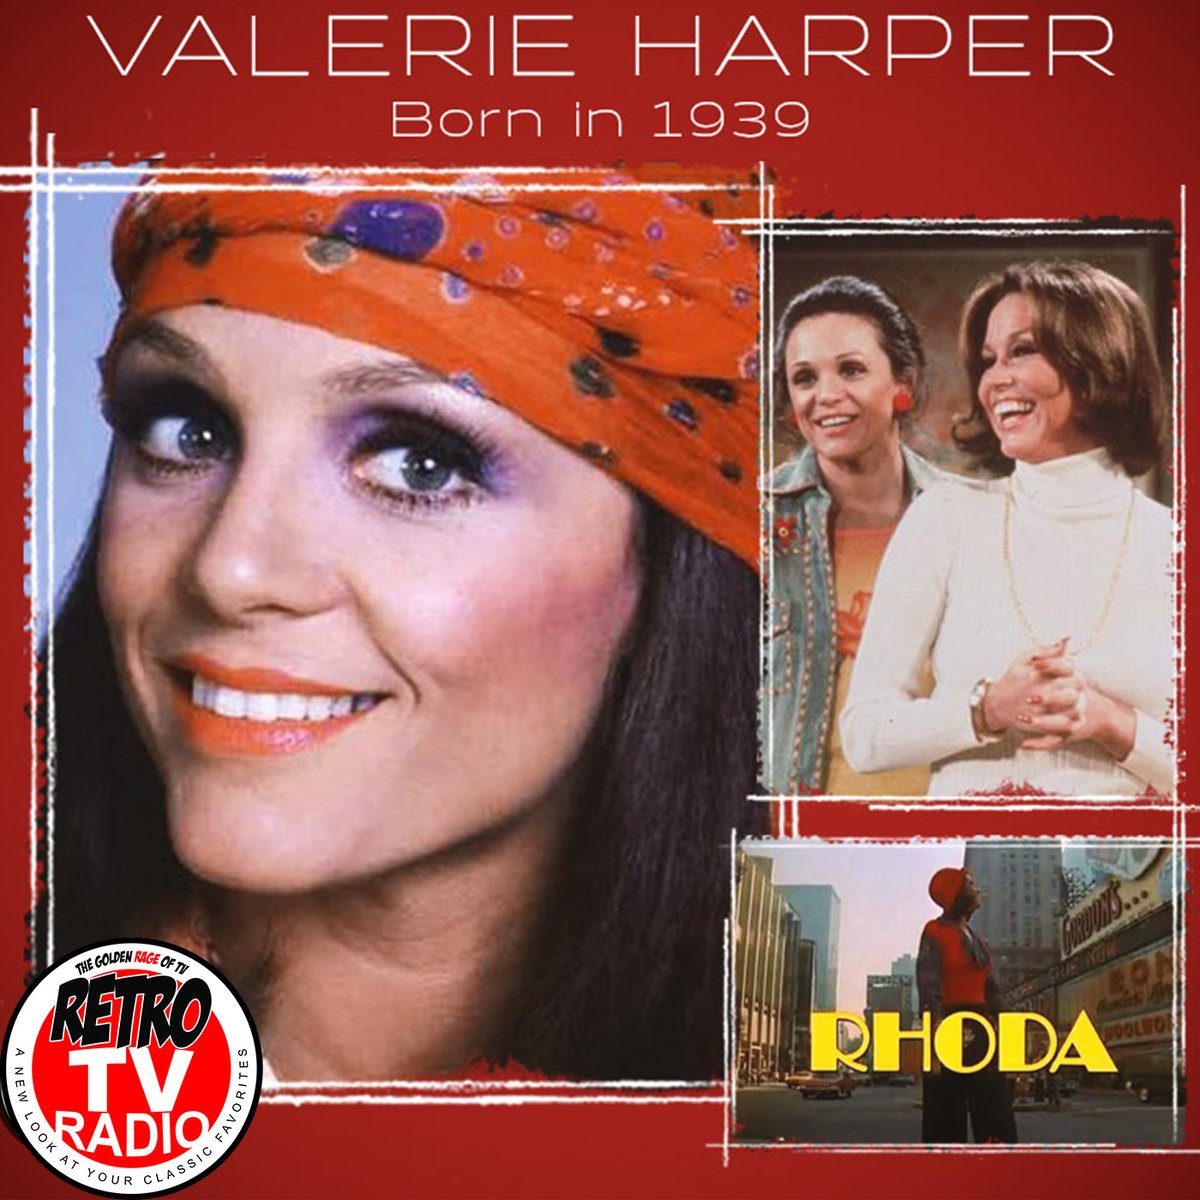 No 'foolin'' it's #Rhoda! #valerieharper #themarytylermooreshow #classictelevision #retrotvradio